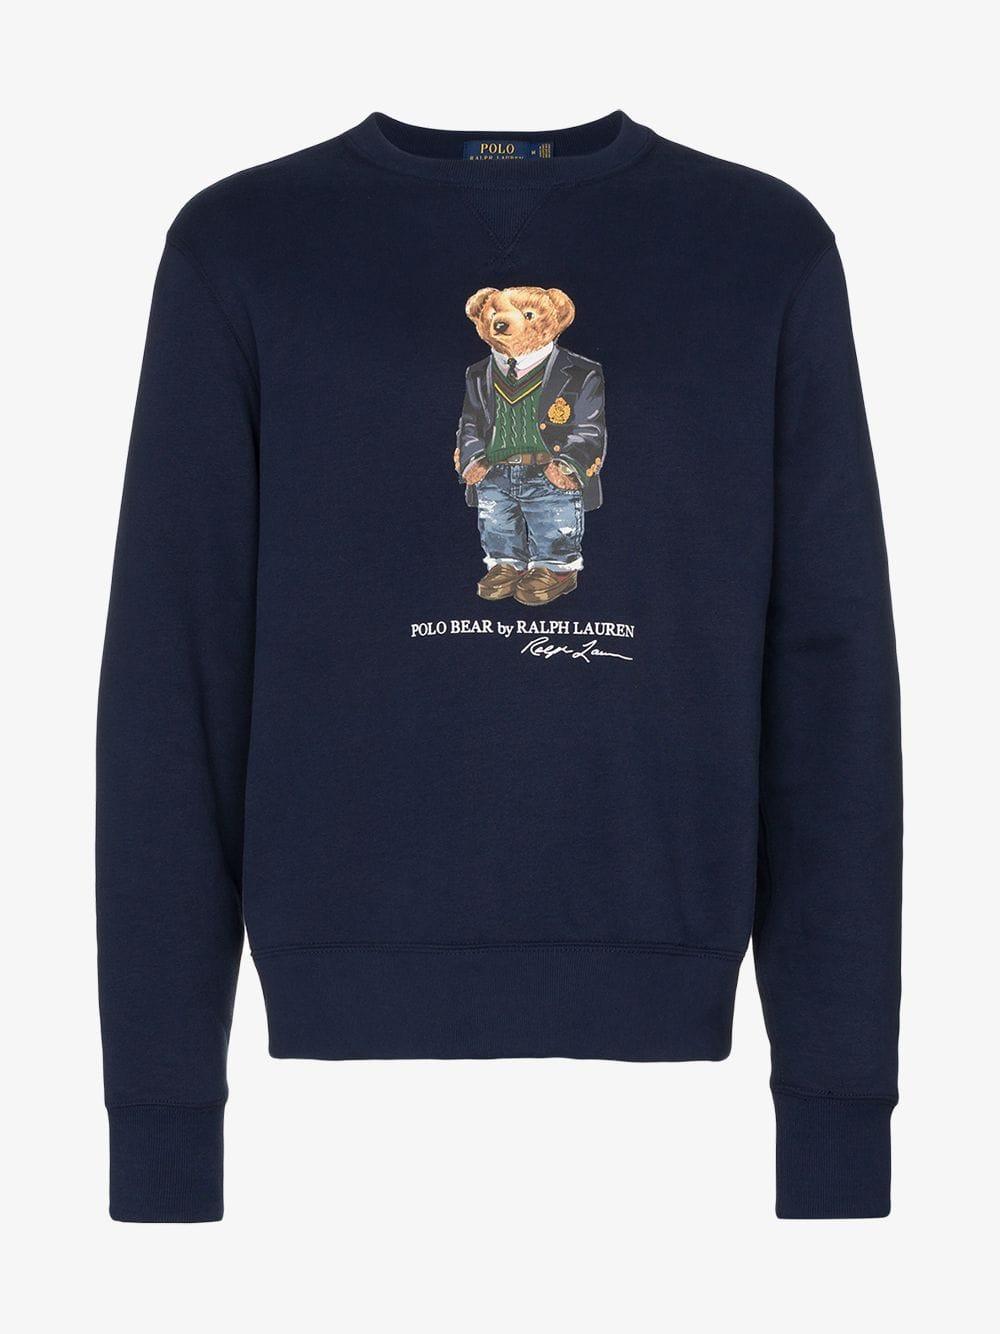 Polo Ralph Lauren Synthetic Teddy Print Sweatshirt in Blue for Men - Lyst